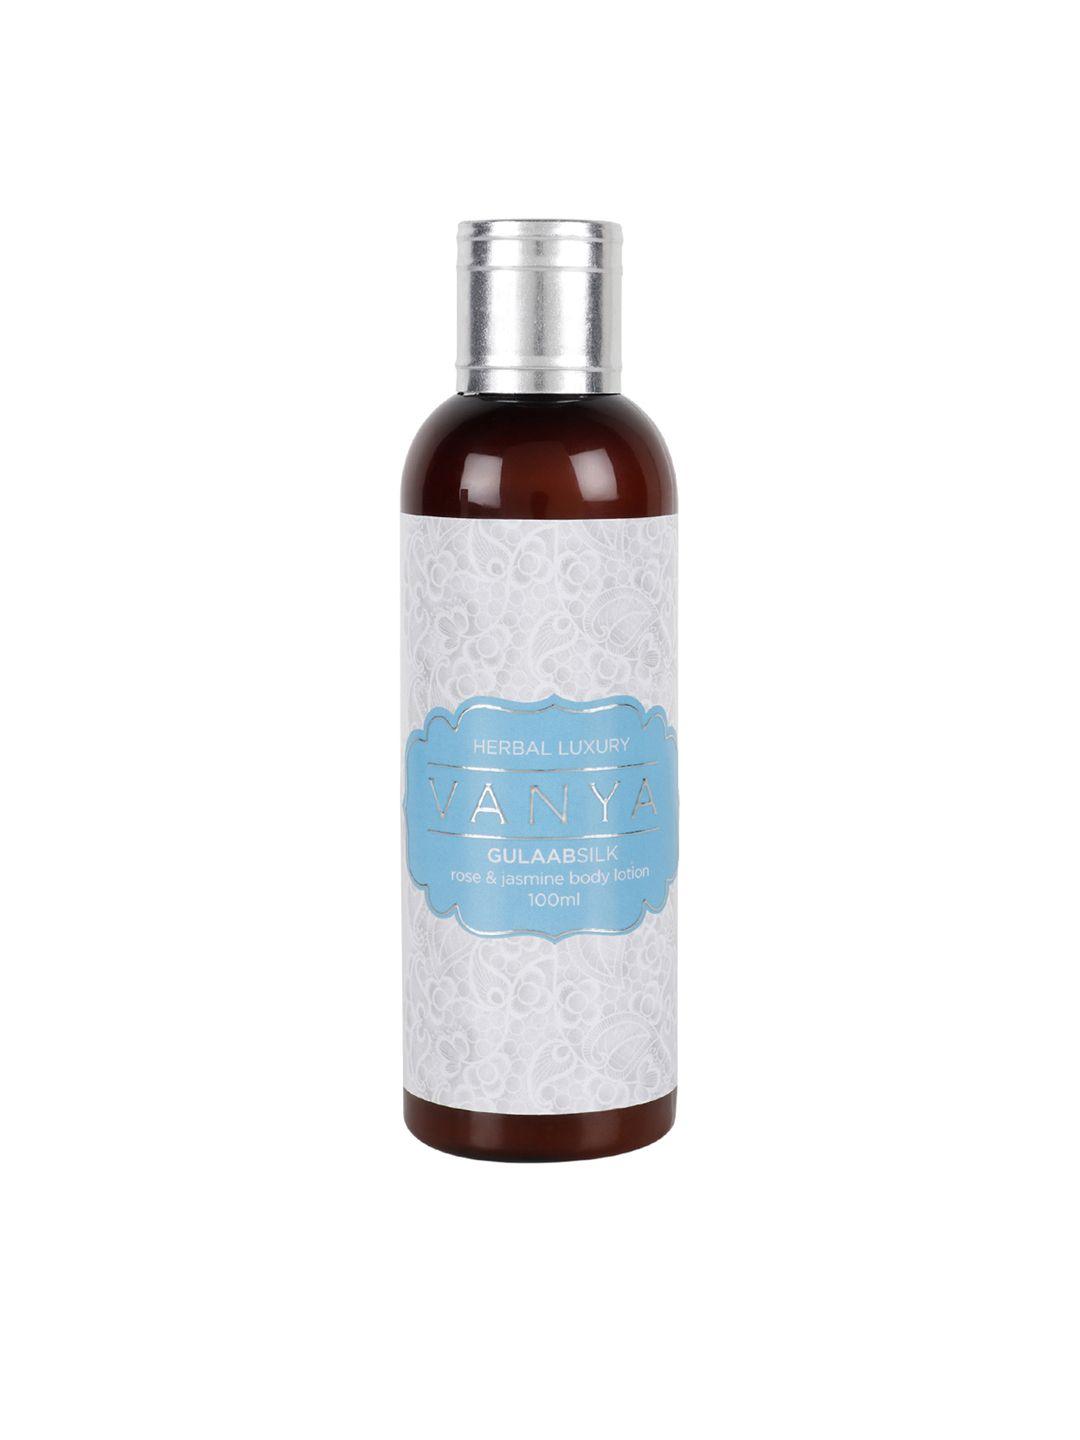 herbal luxury vanya gulaab silk rose & jasmine body lotion - 100 ml